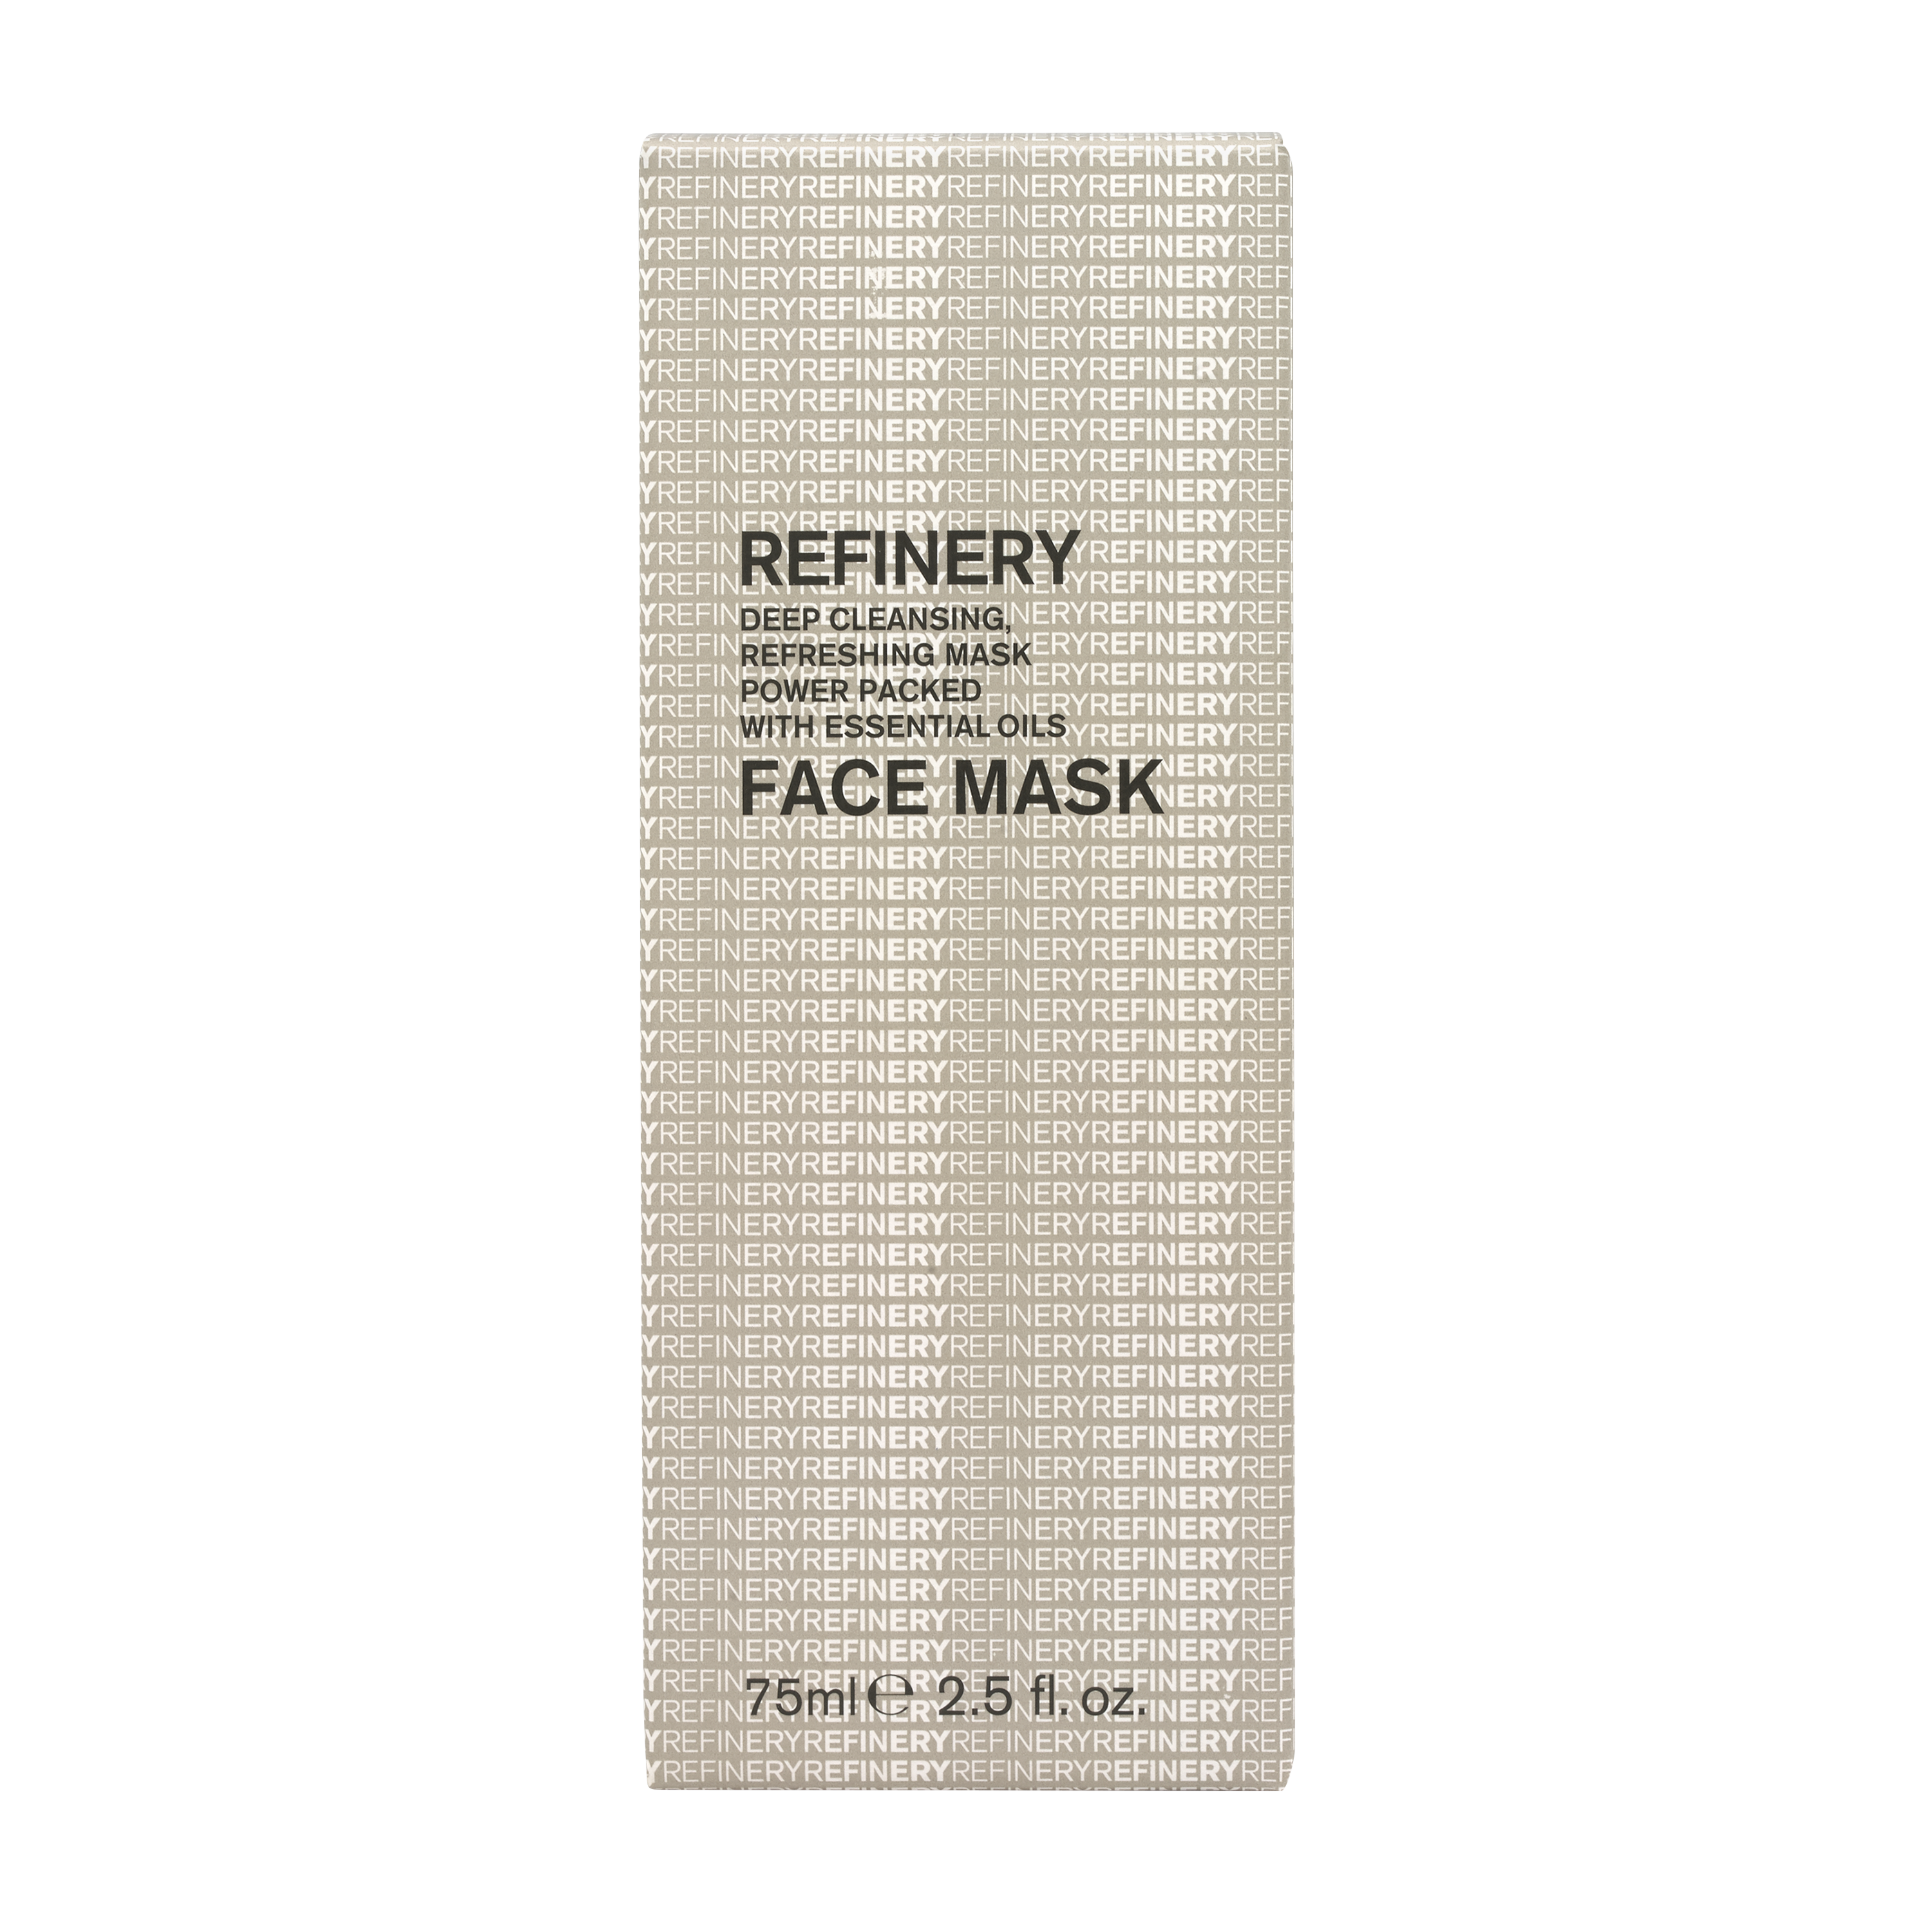 Refinery Face Mask Aromatherapy Associates